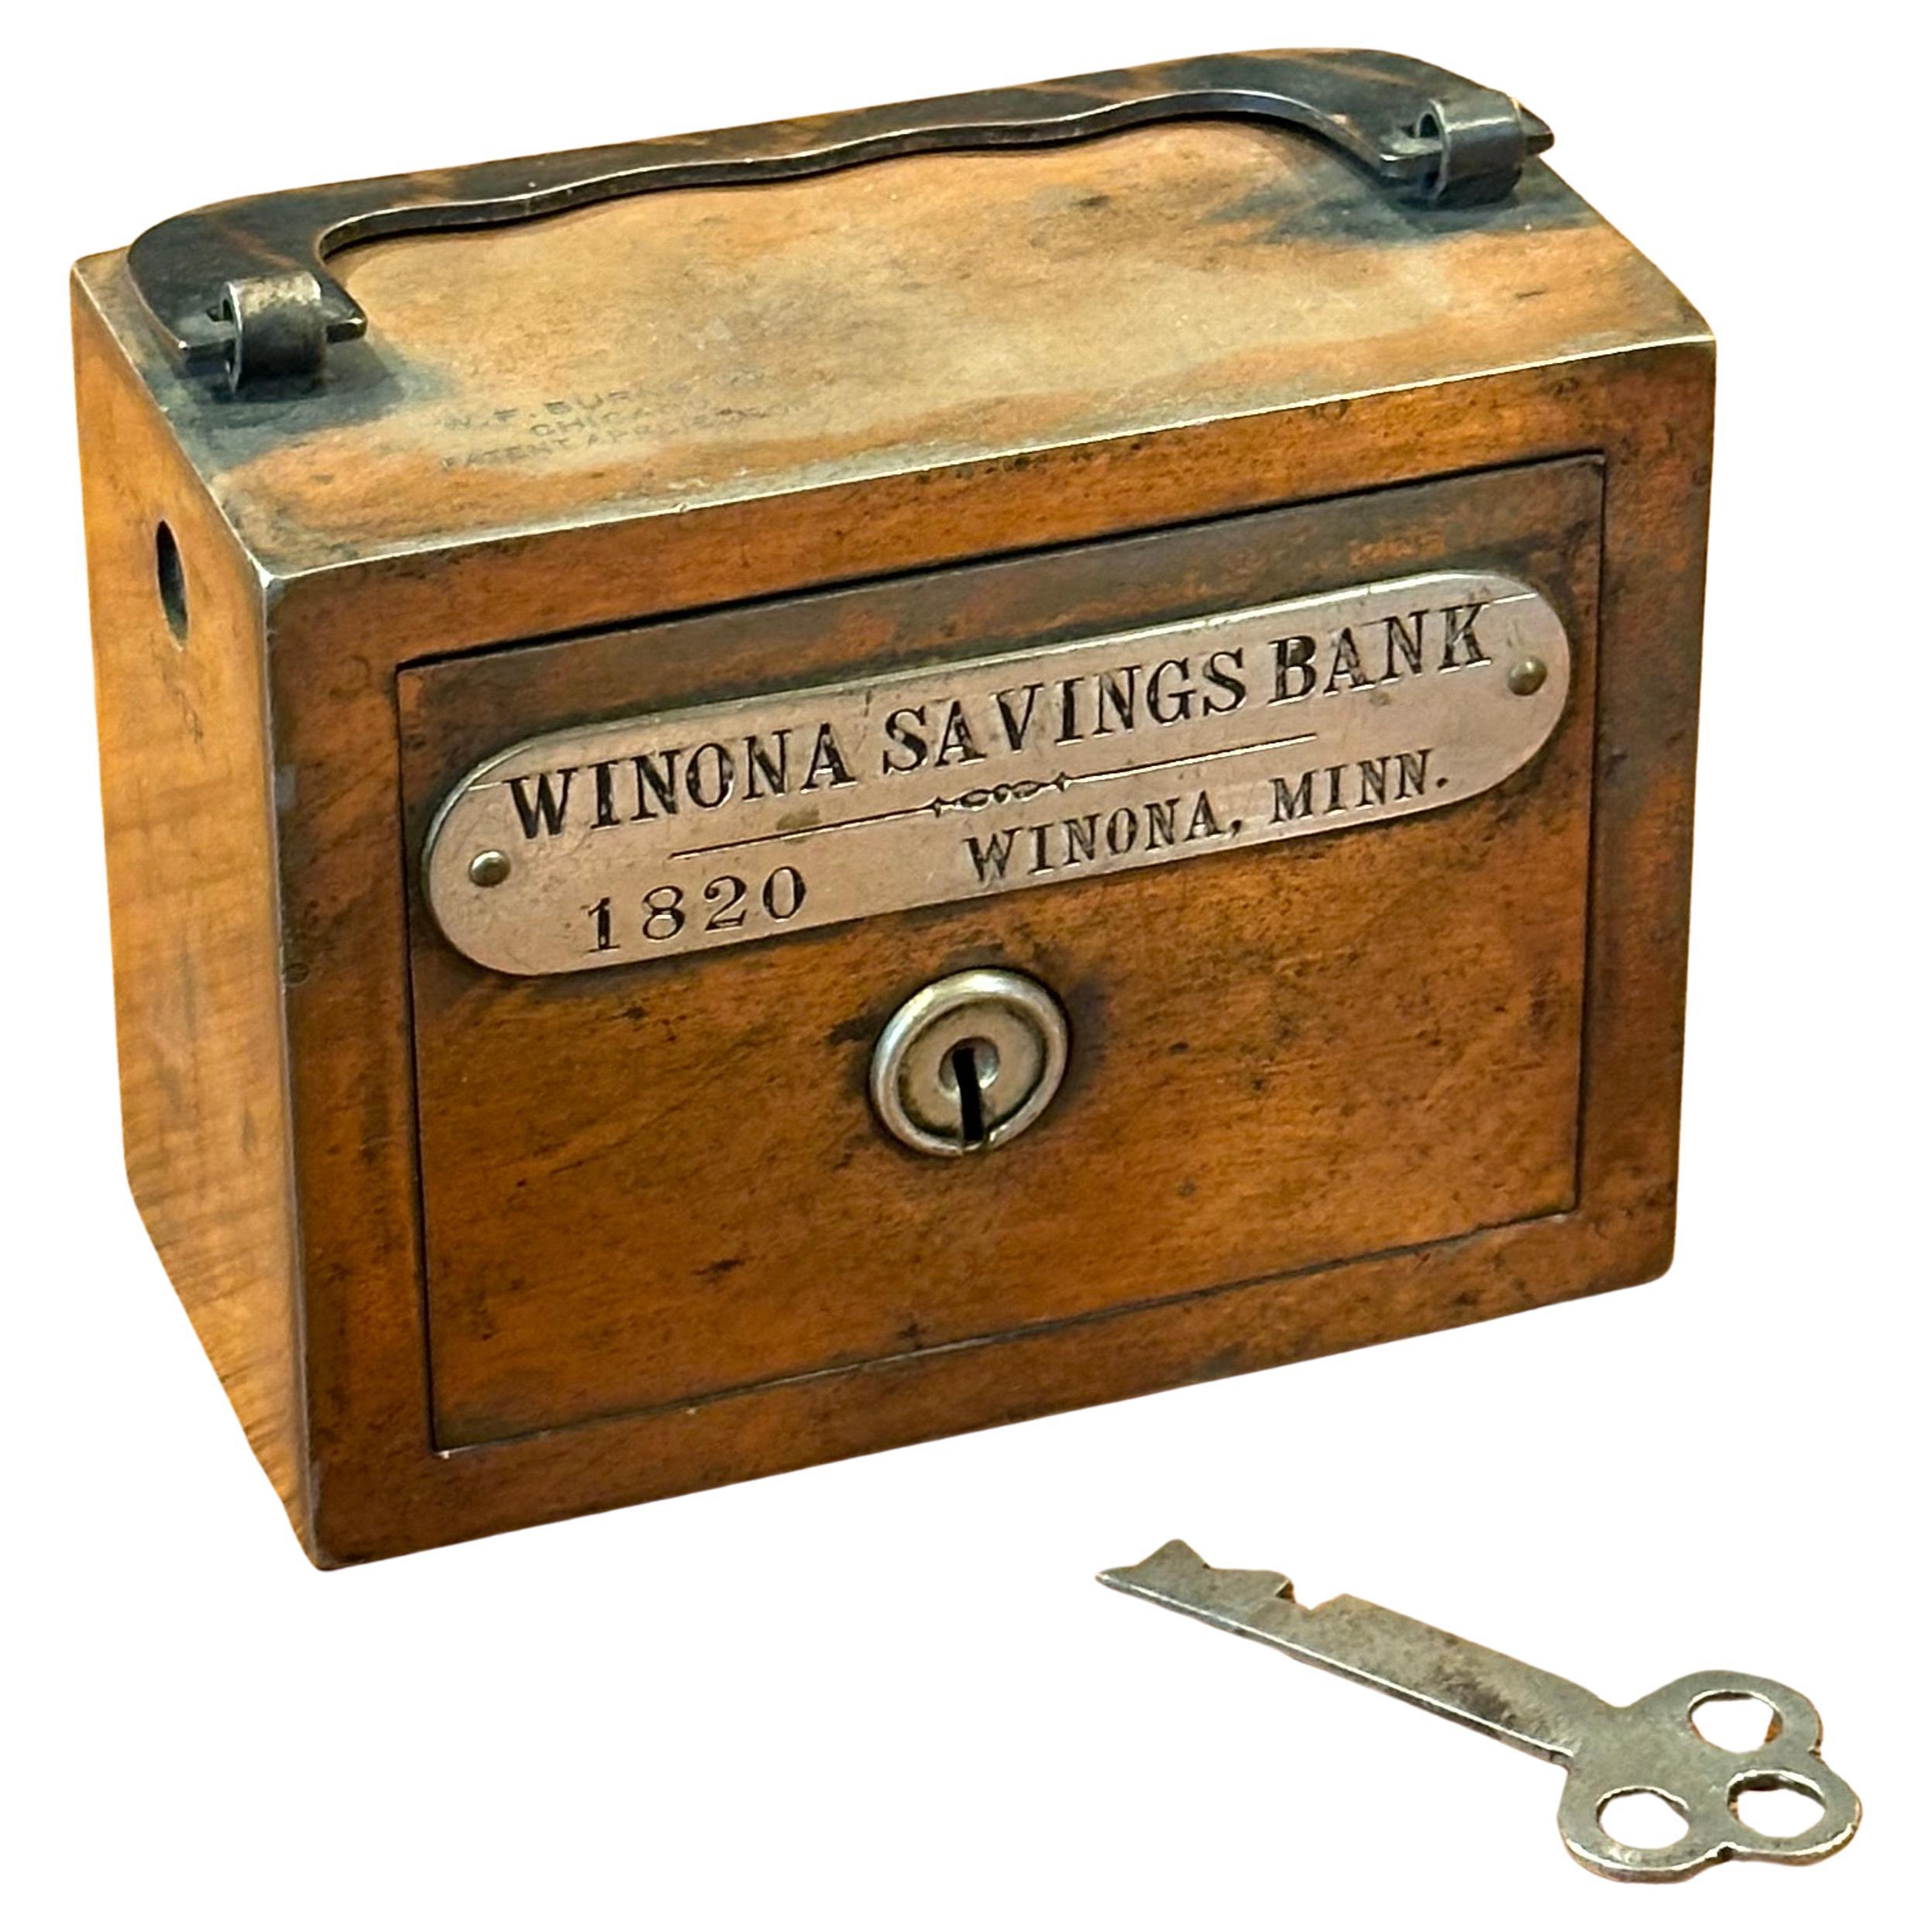 Vintage "Winona Savings Bank" of Minnesota Money Box by W.F. Burns & Co.